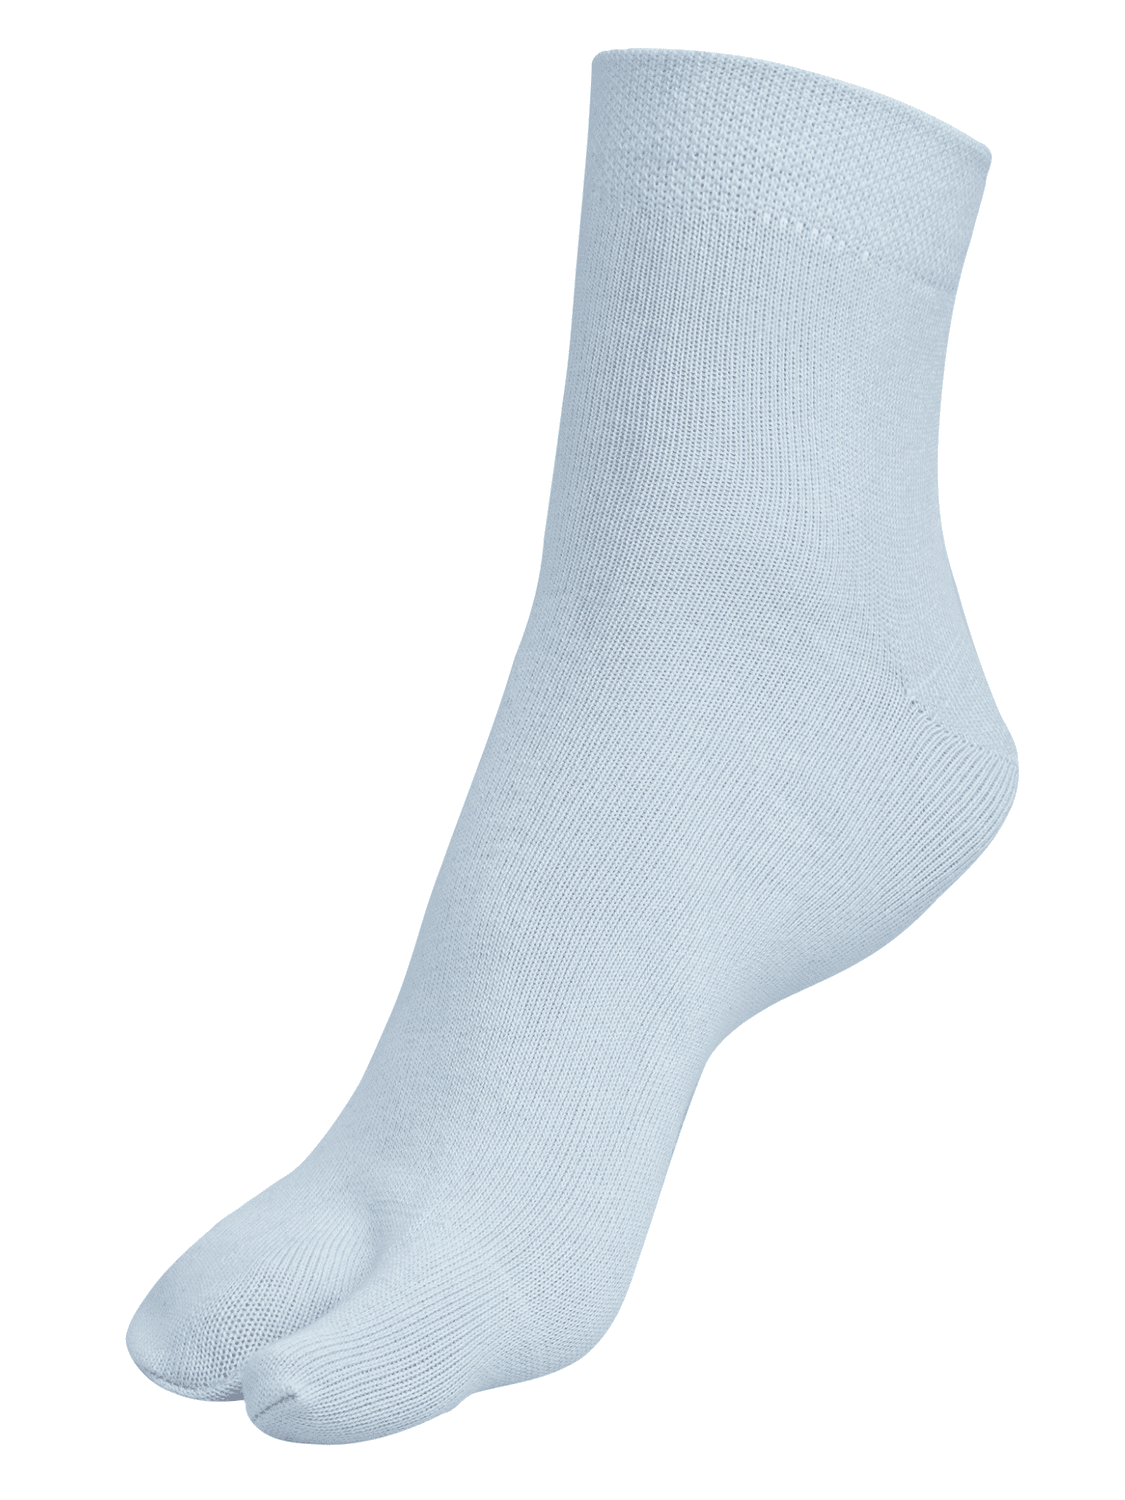 Ankle Thumb Socks - Light Blue